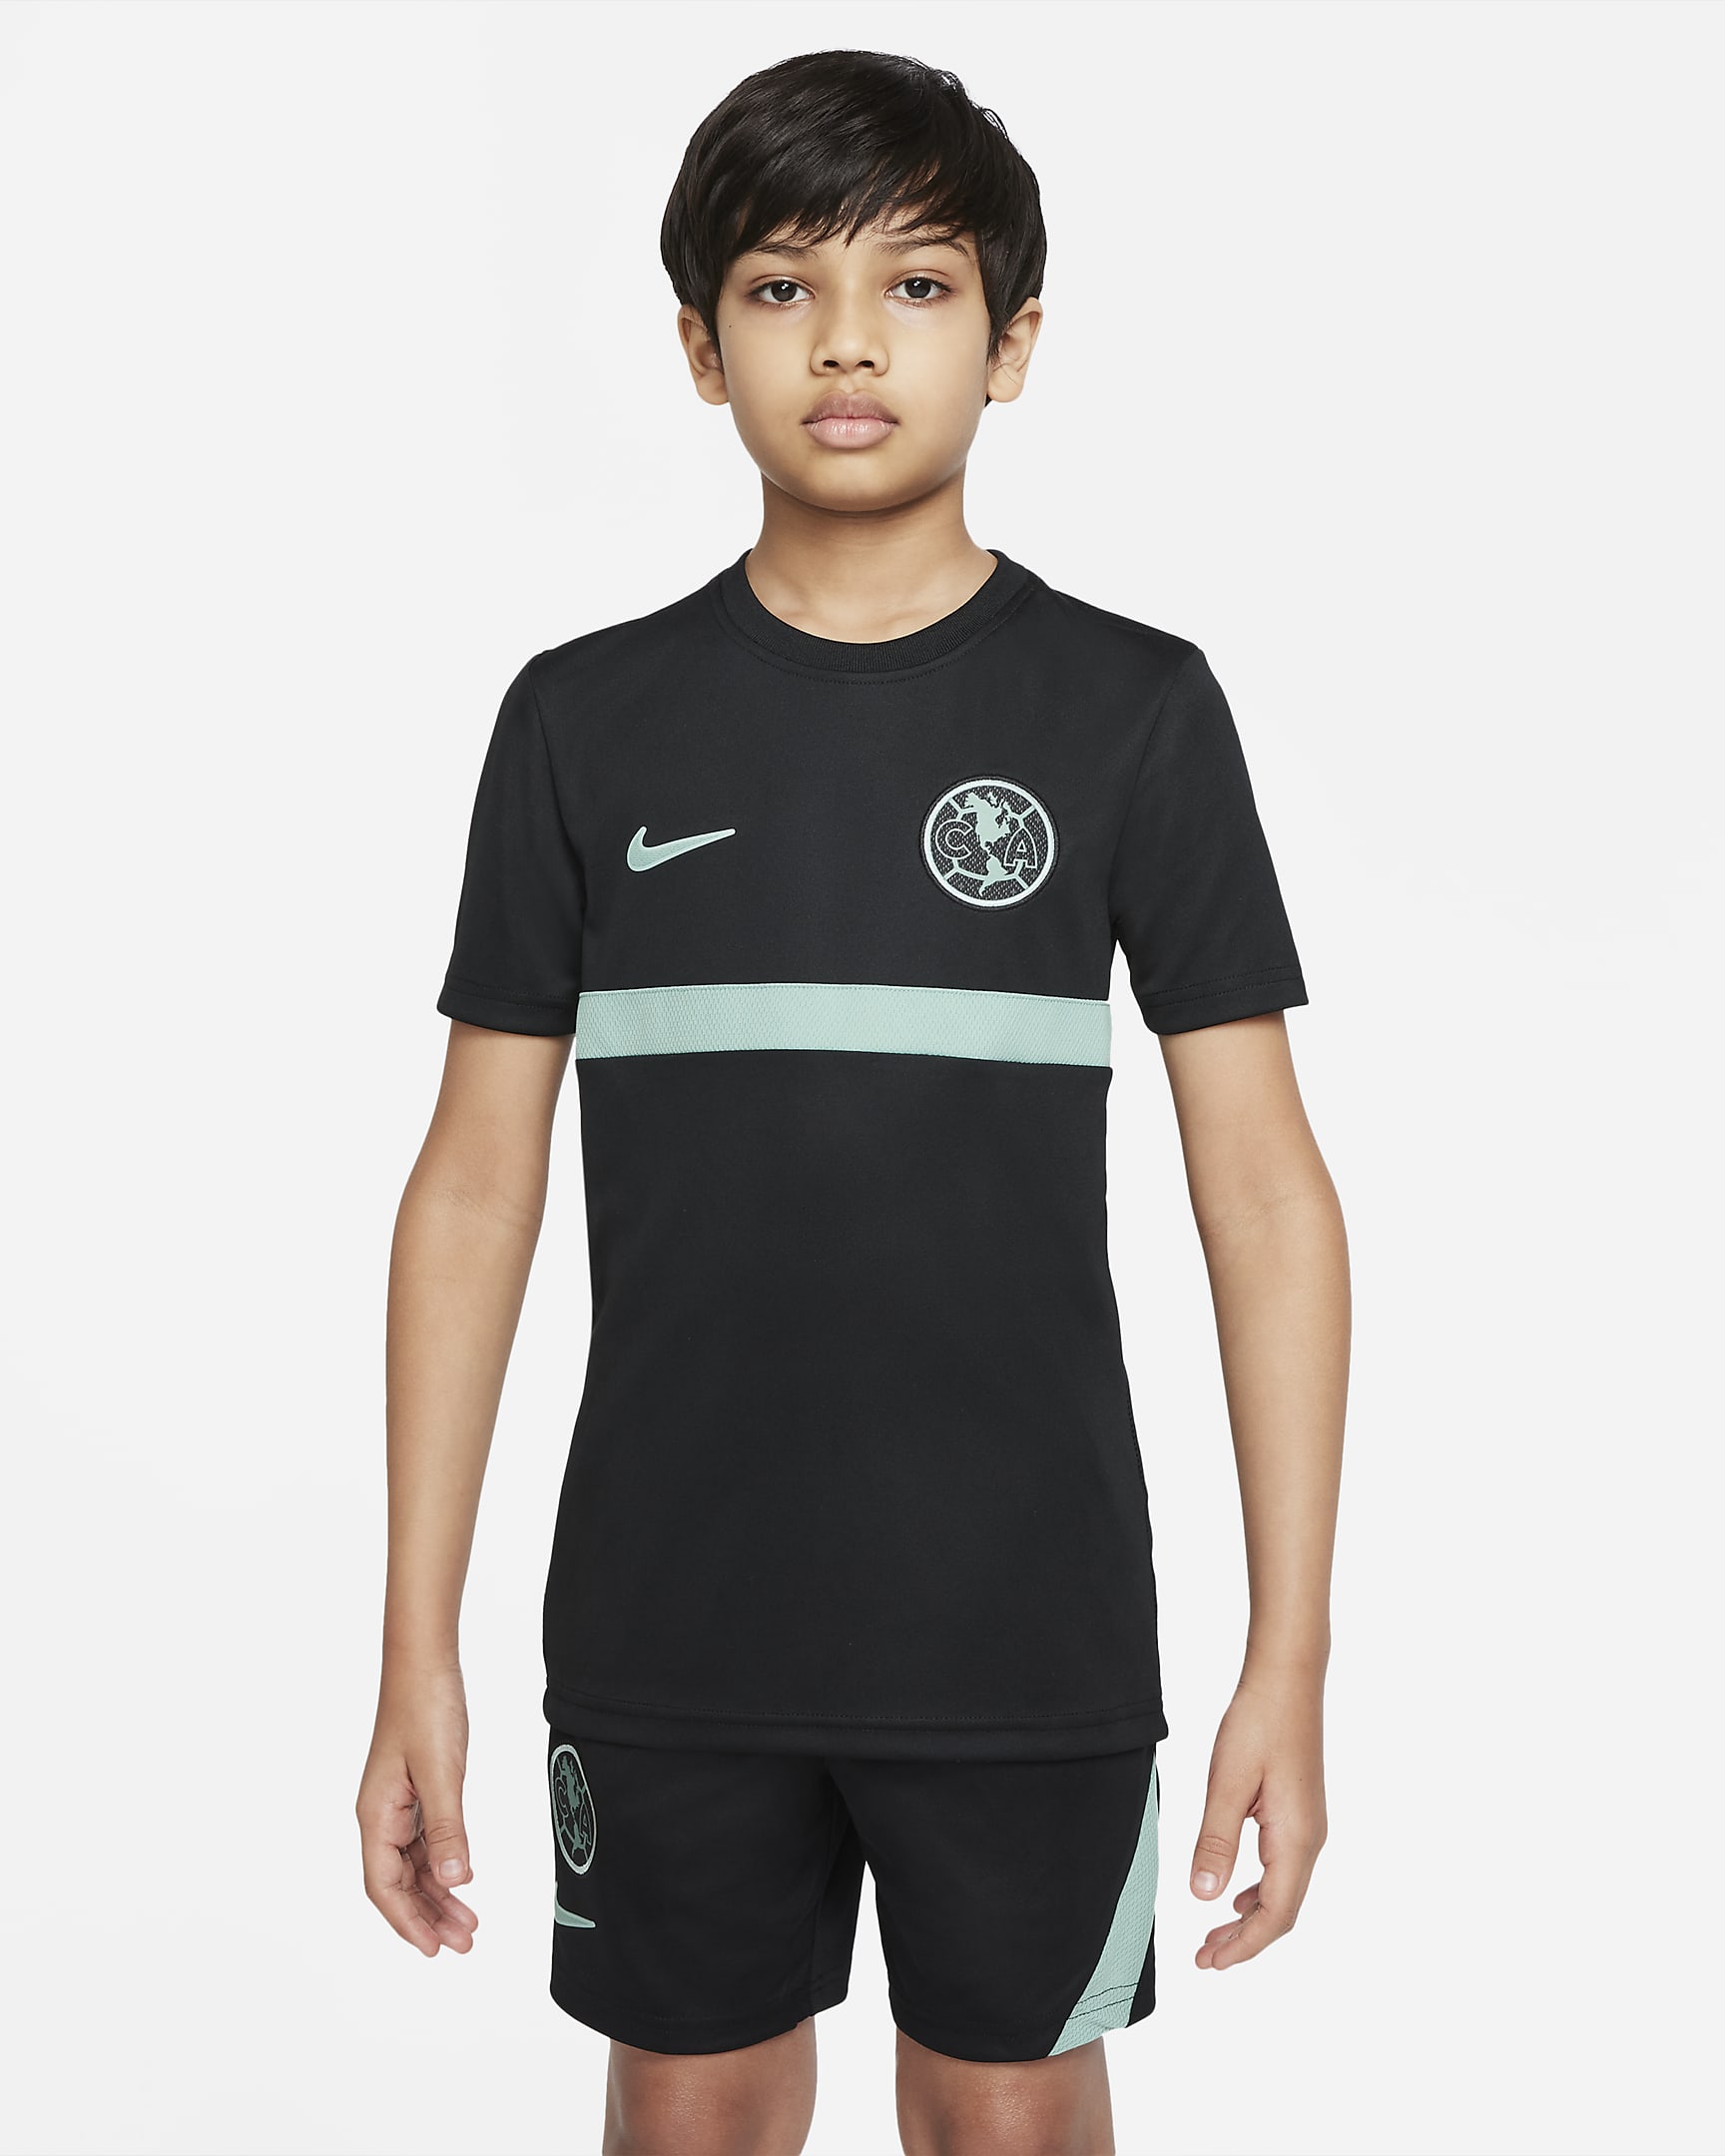 Club América Academy Pro Big Kids' Nike Dri-FIT Short-Sleeve Soccer Top ...